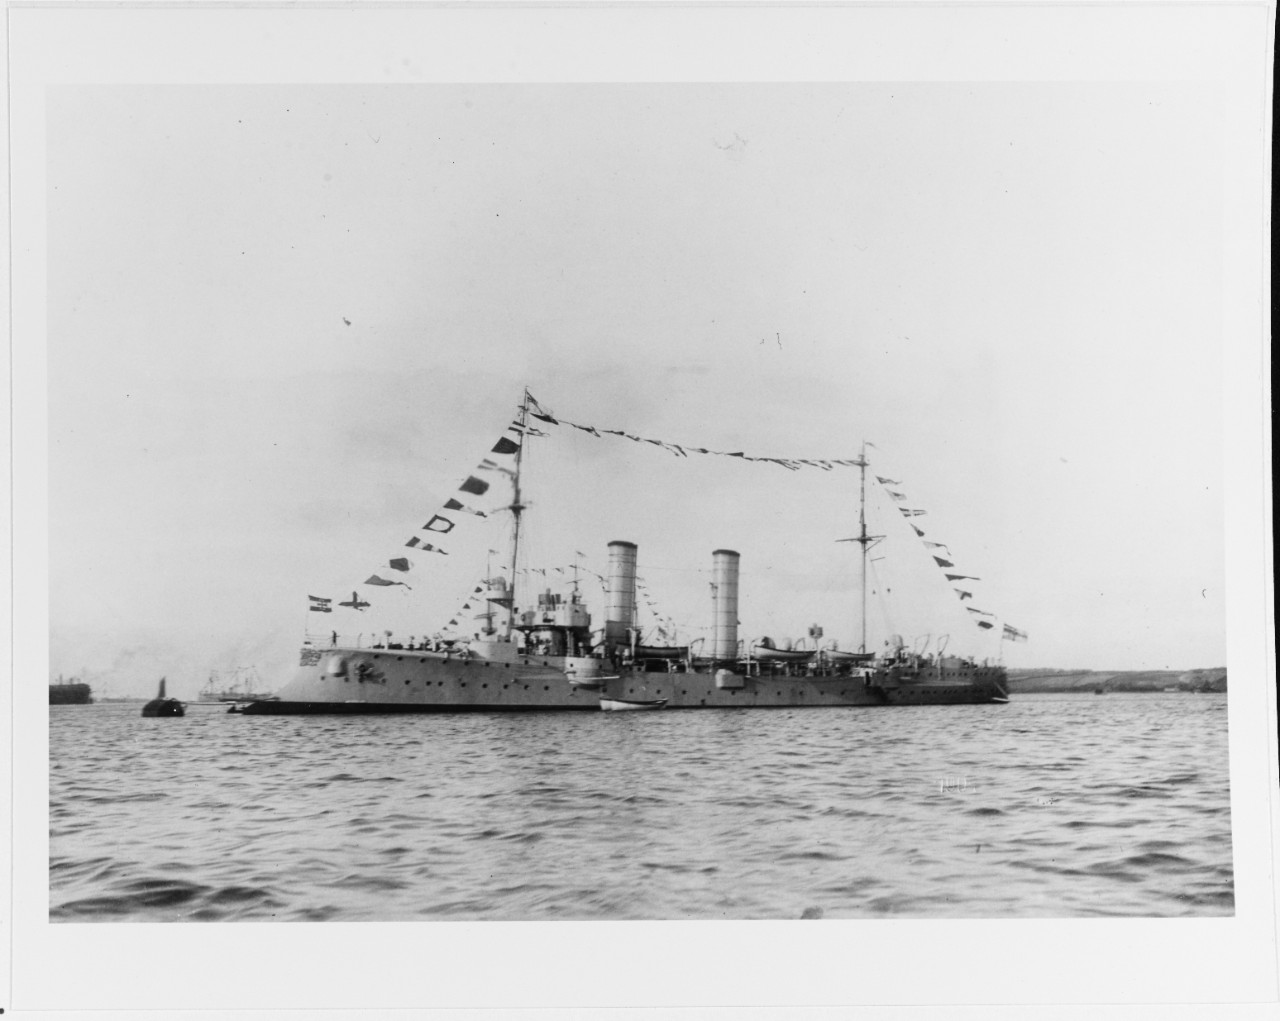 German light cruiser, circa 1901